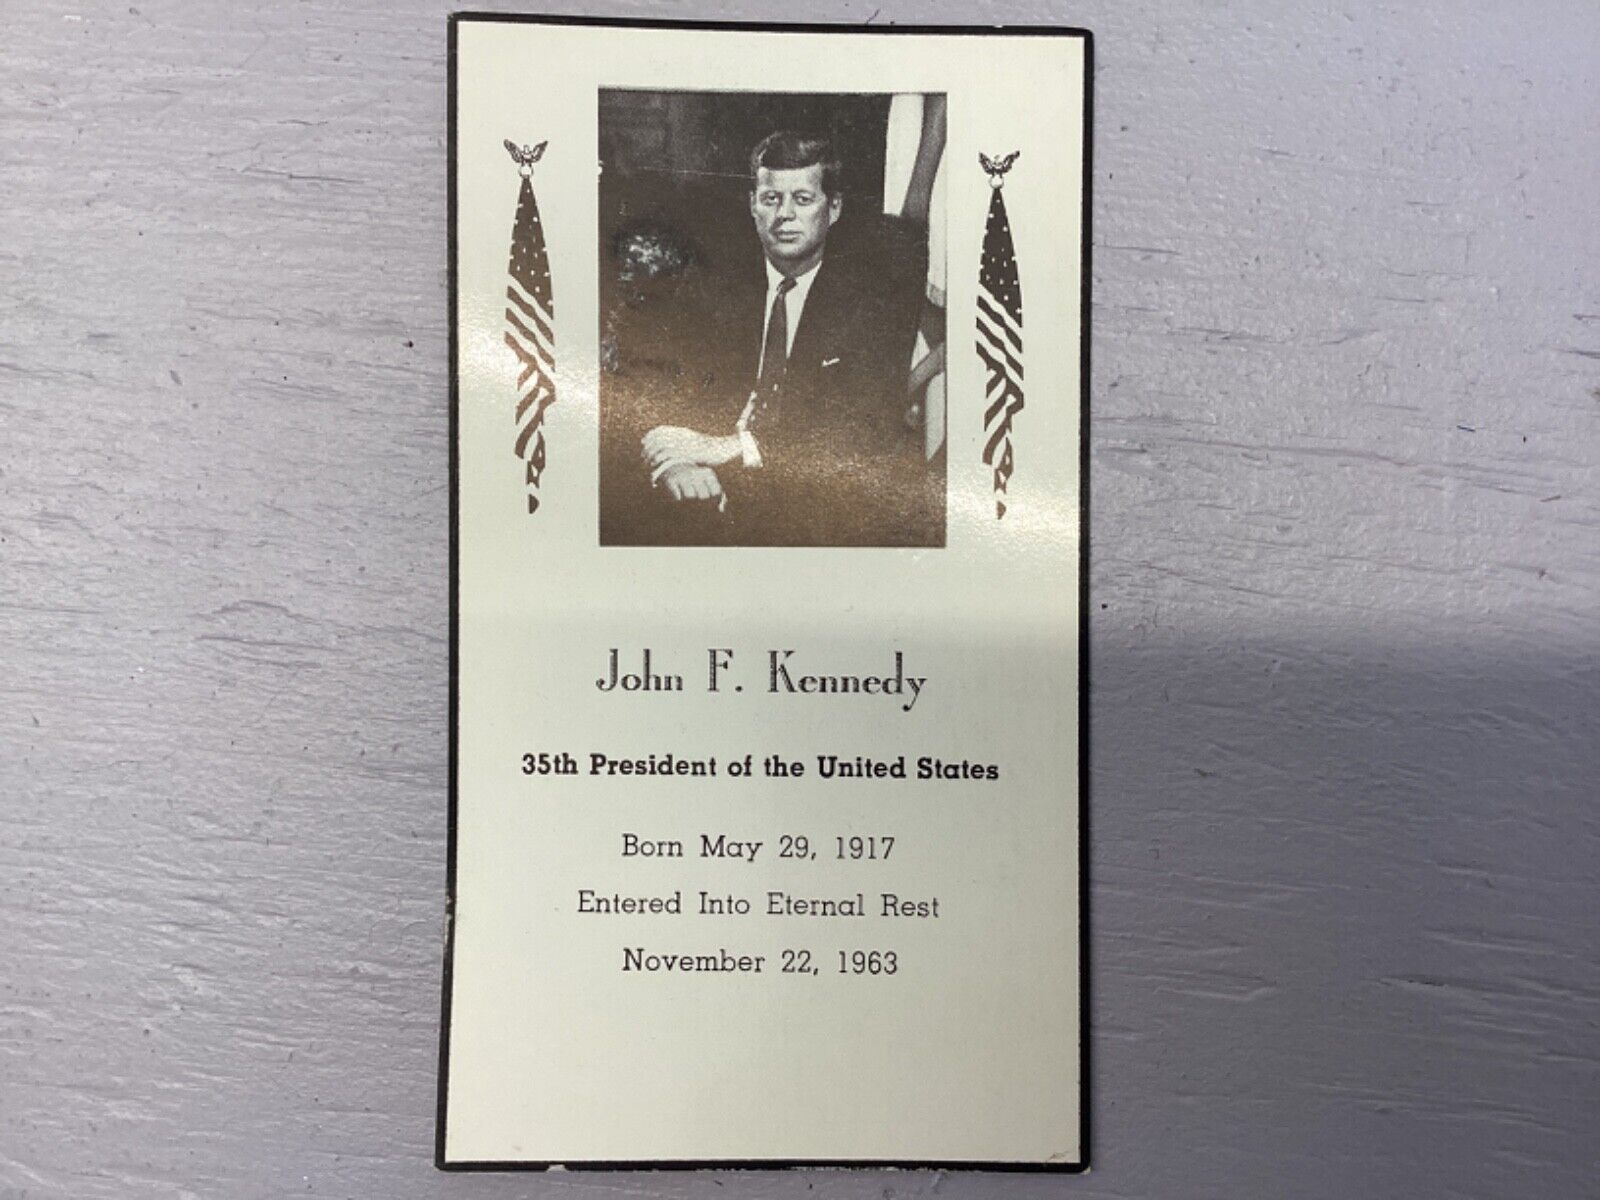 1963 John F. Kennedy Funeral Mass Card Very Good Condition 4x2.5”